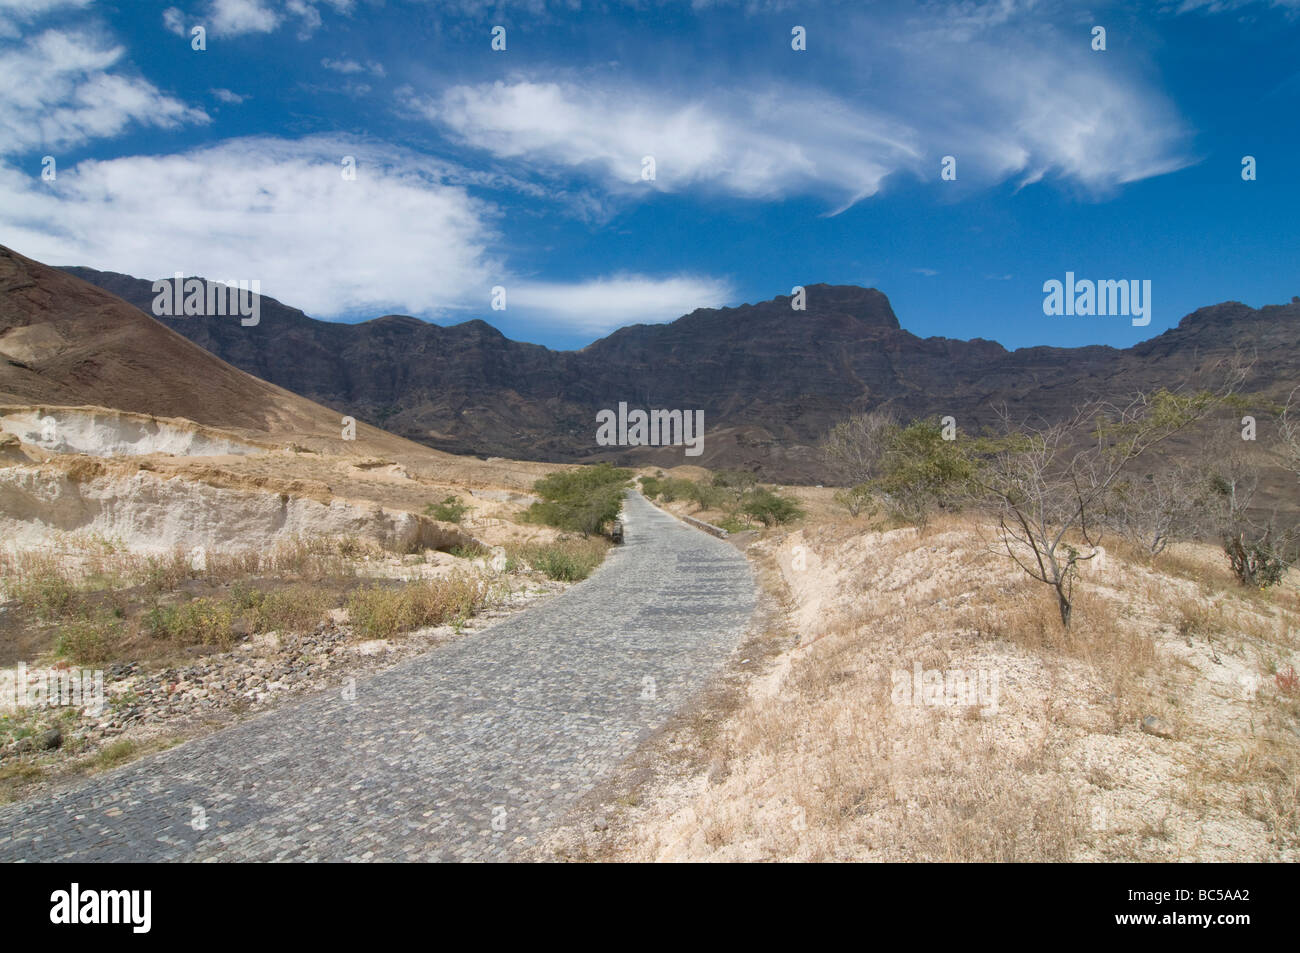 Road through rocky landscape San Antao Cabo Verde Africa Stock Photo